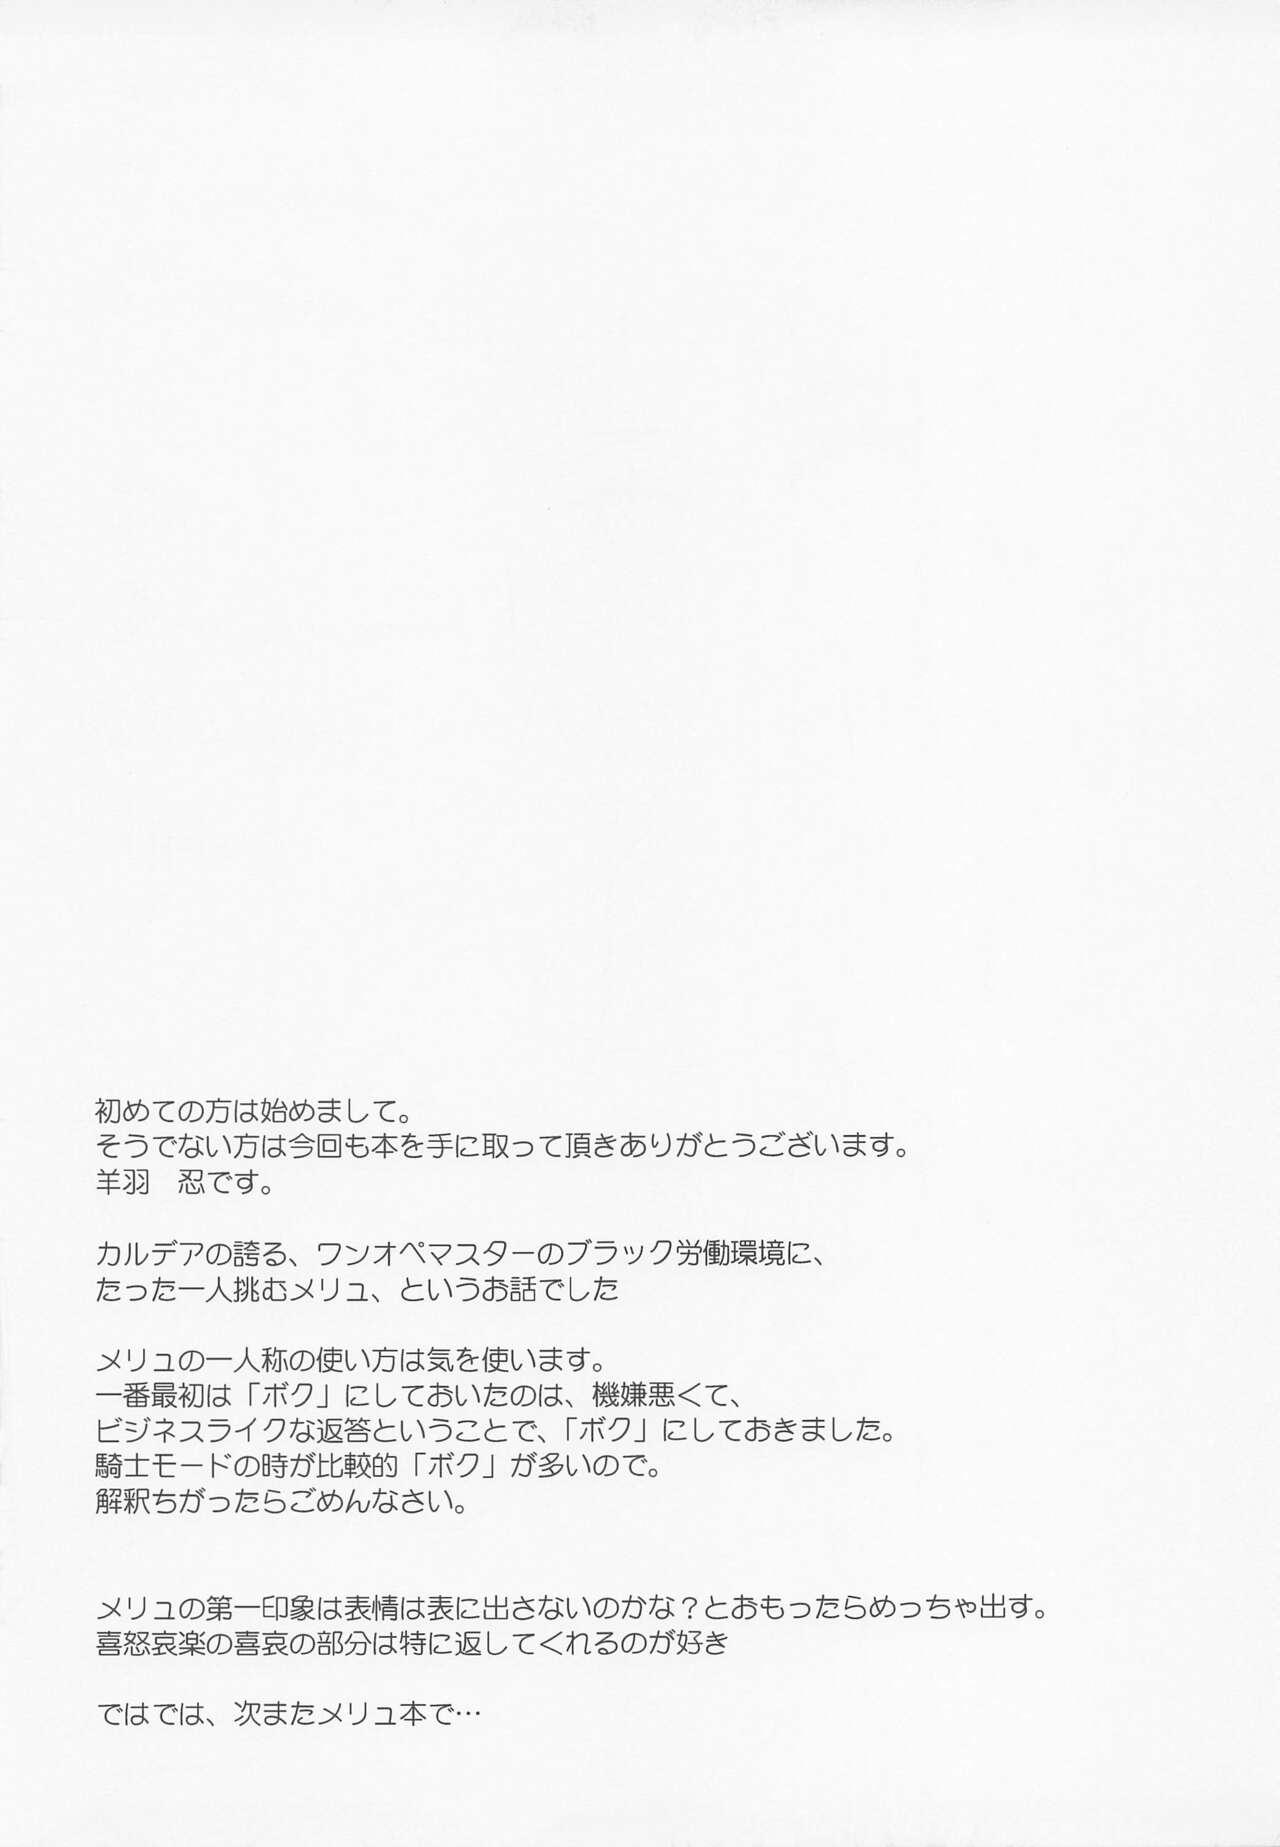 Chacal Kyuuka Biyori no Melusine - Fate grand order Gemendo - Page 15